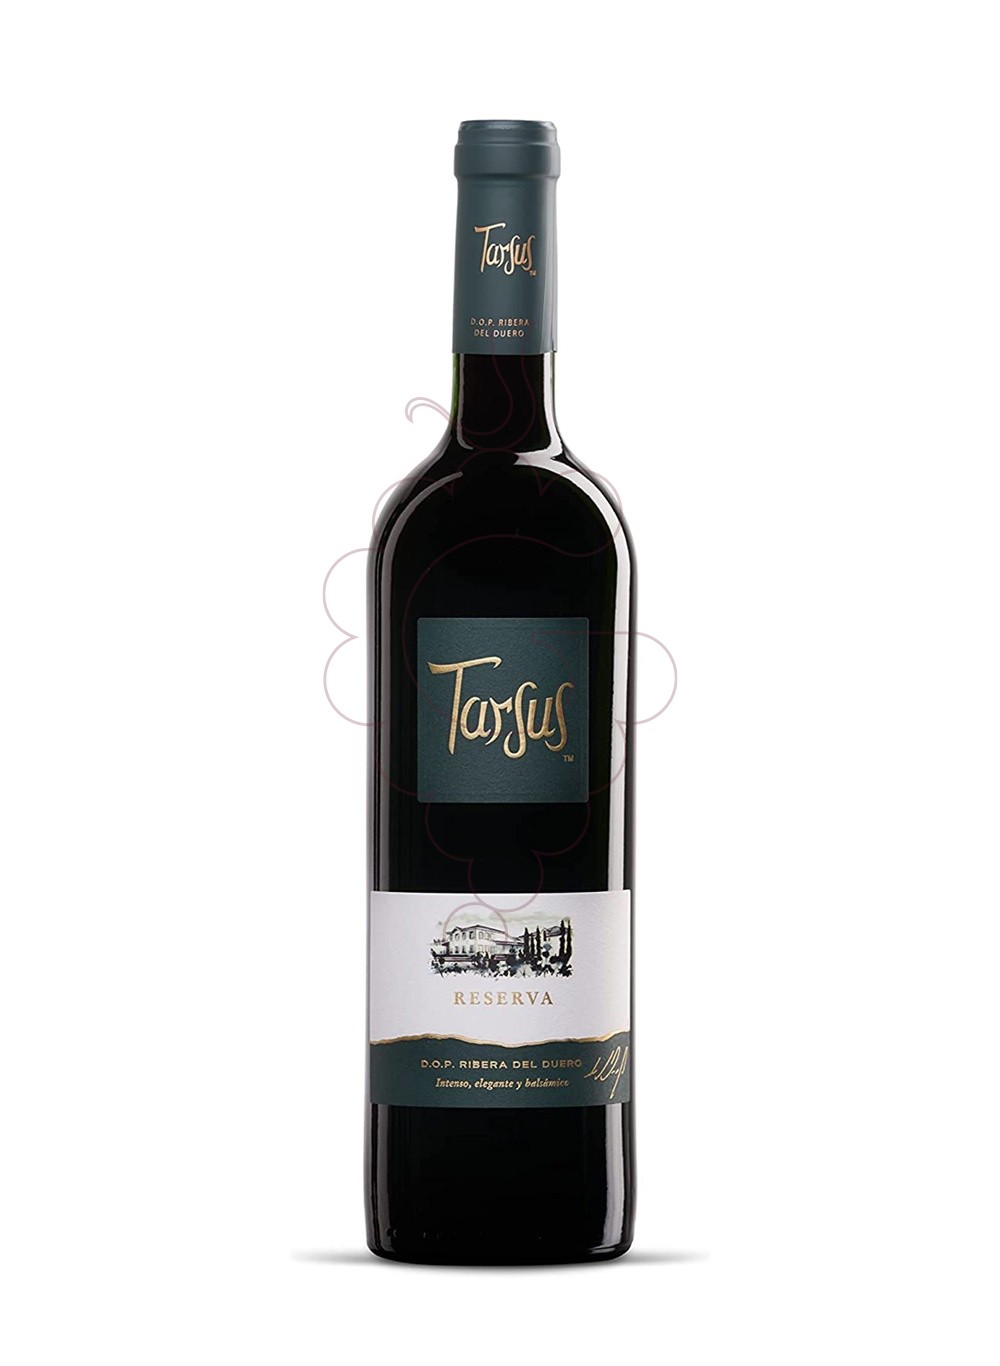 Foto Tarsus Reserva vino tinto